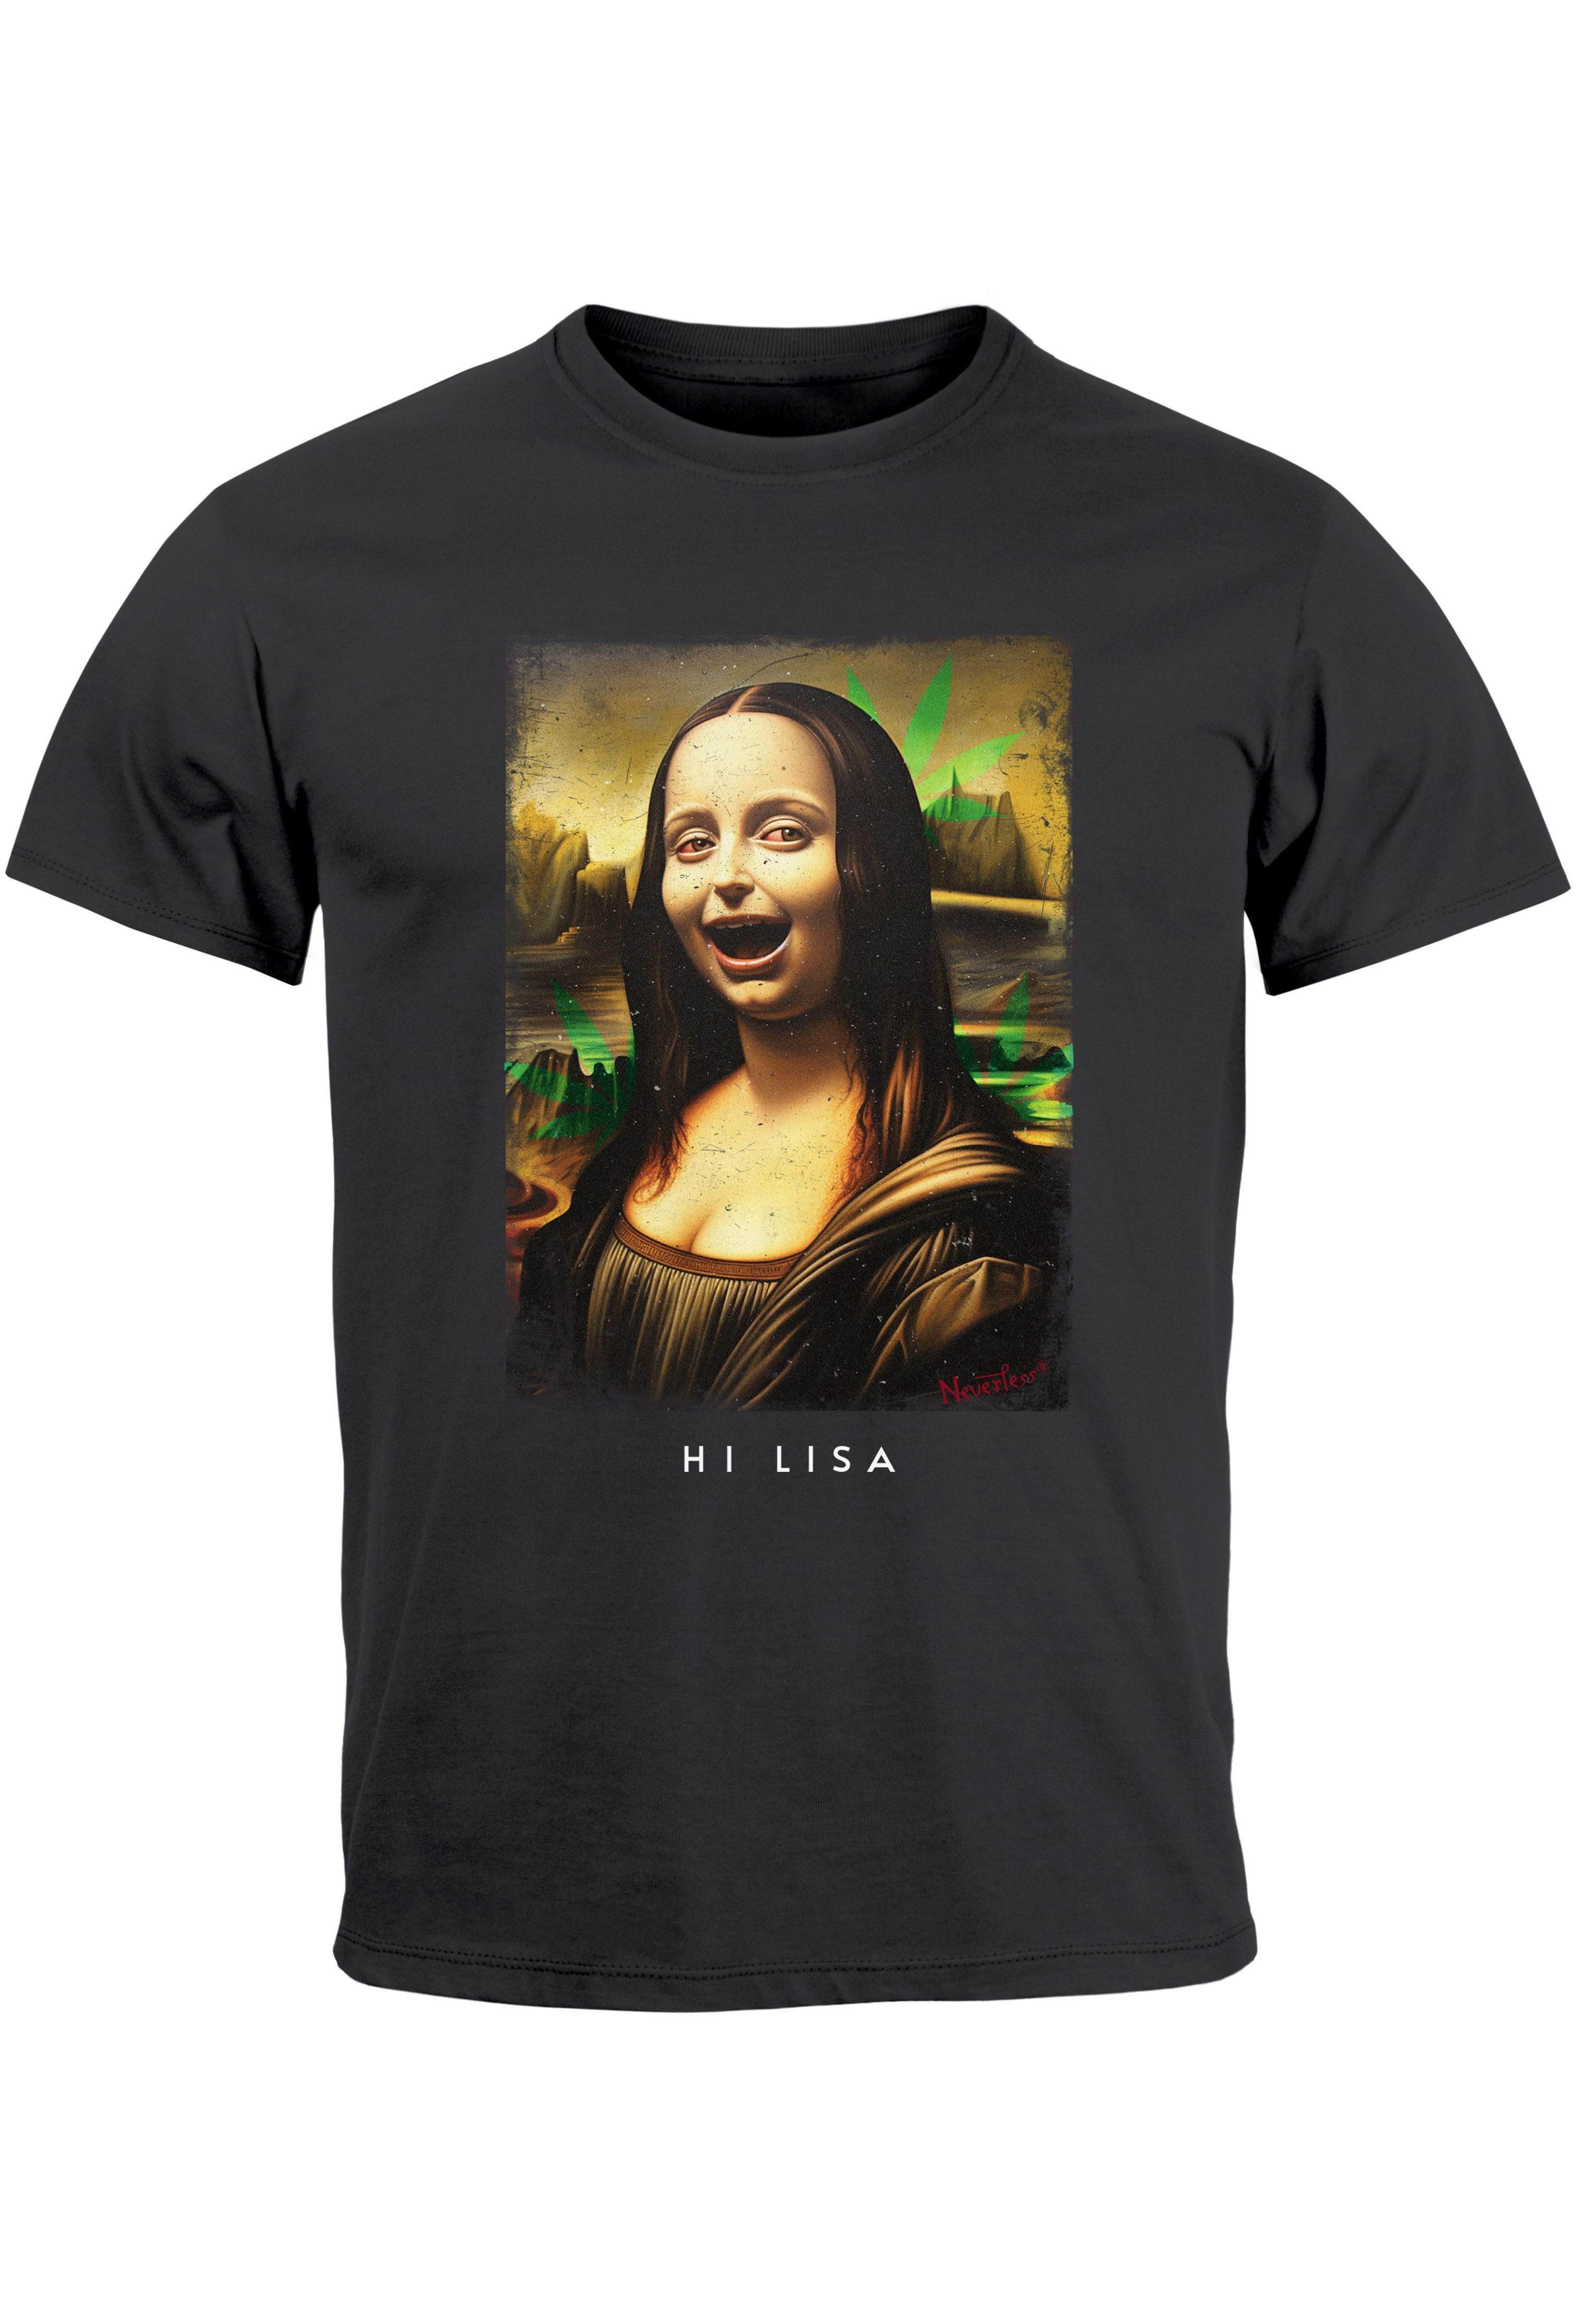 MoonWorks Print-Shirt Herren T-Shirt Print Parodie Kapuzen-Pullover Lisa anthrazit Stona Print Lisa Aufdruck Mona Meme mit